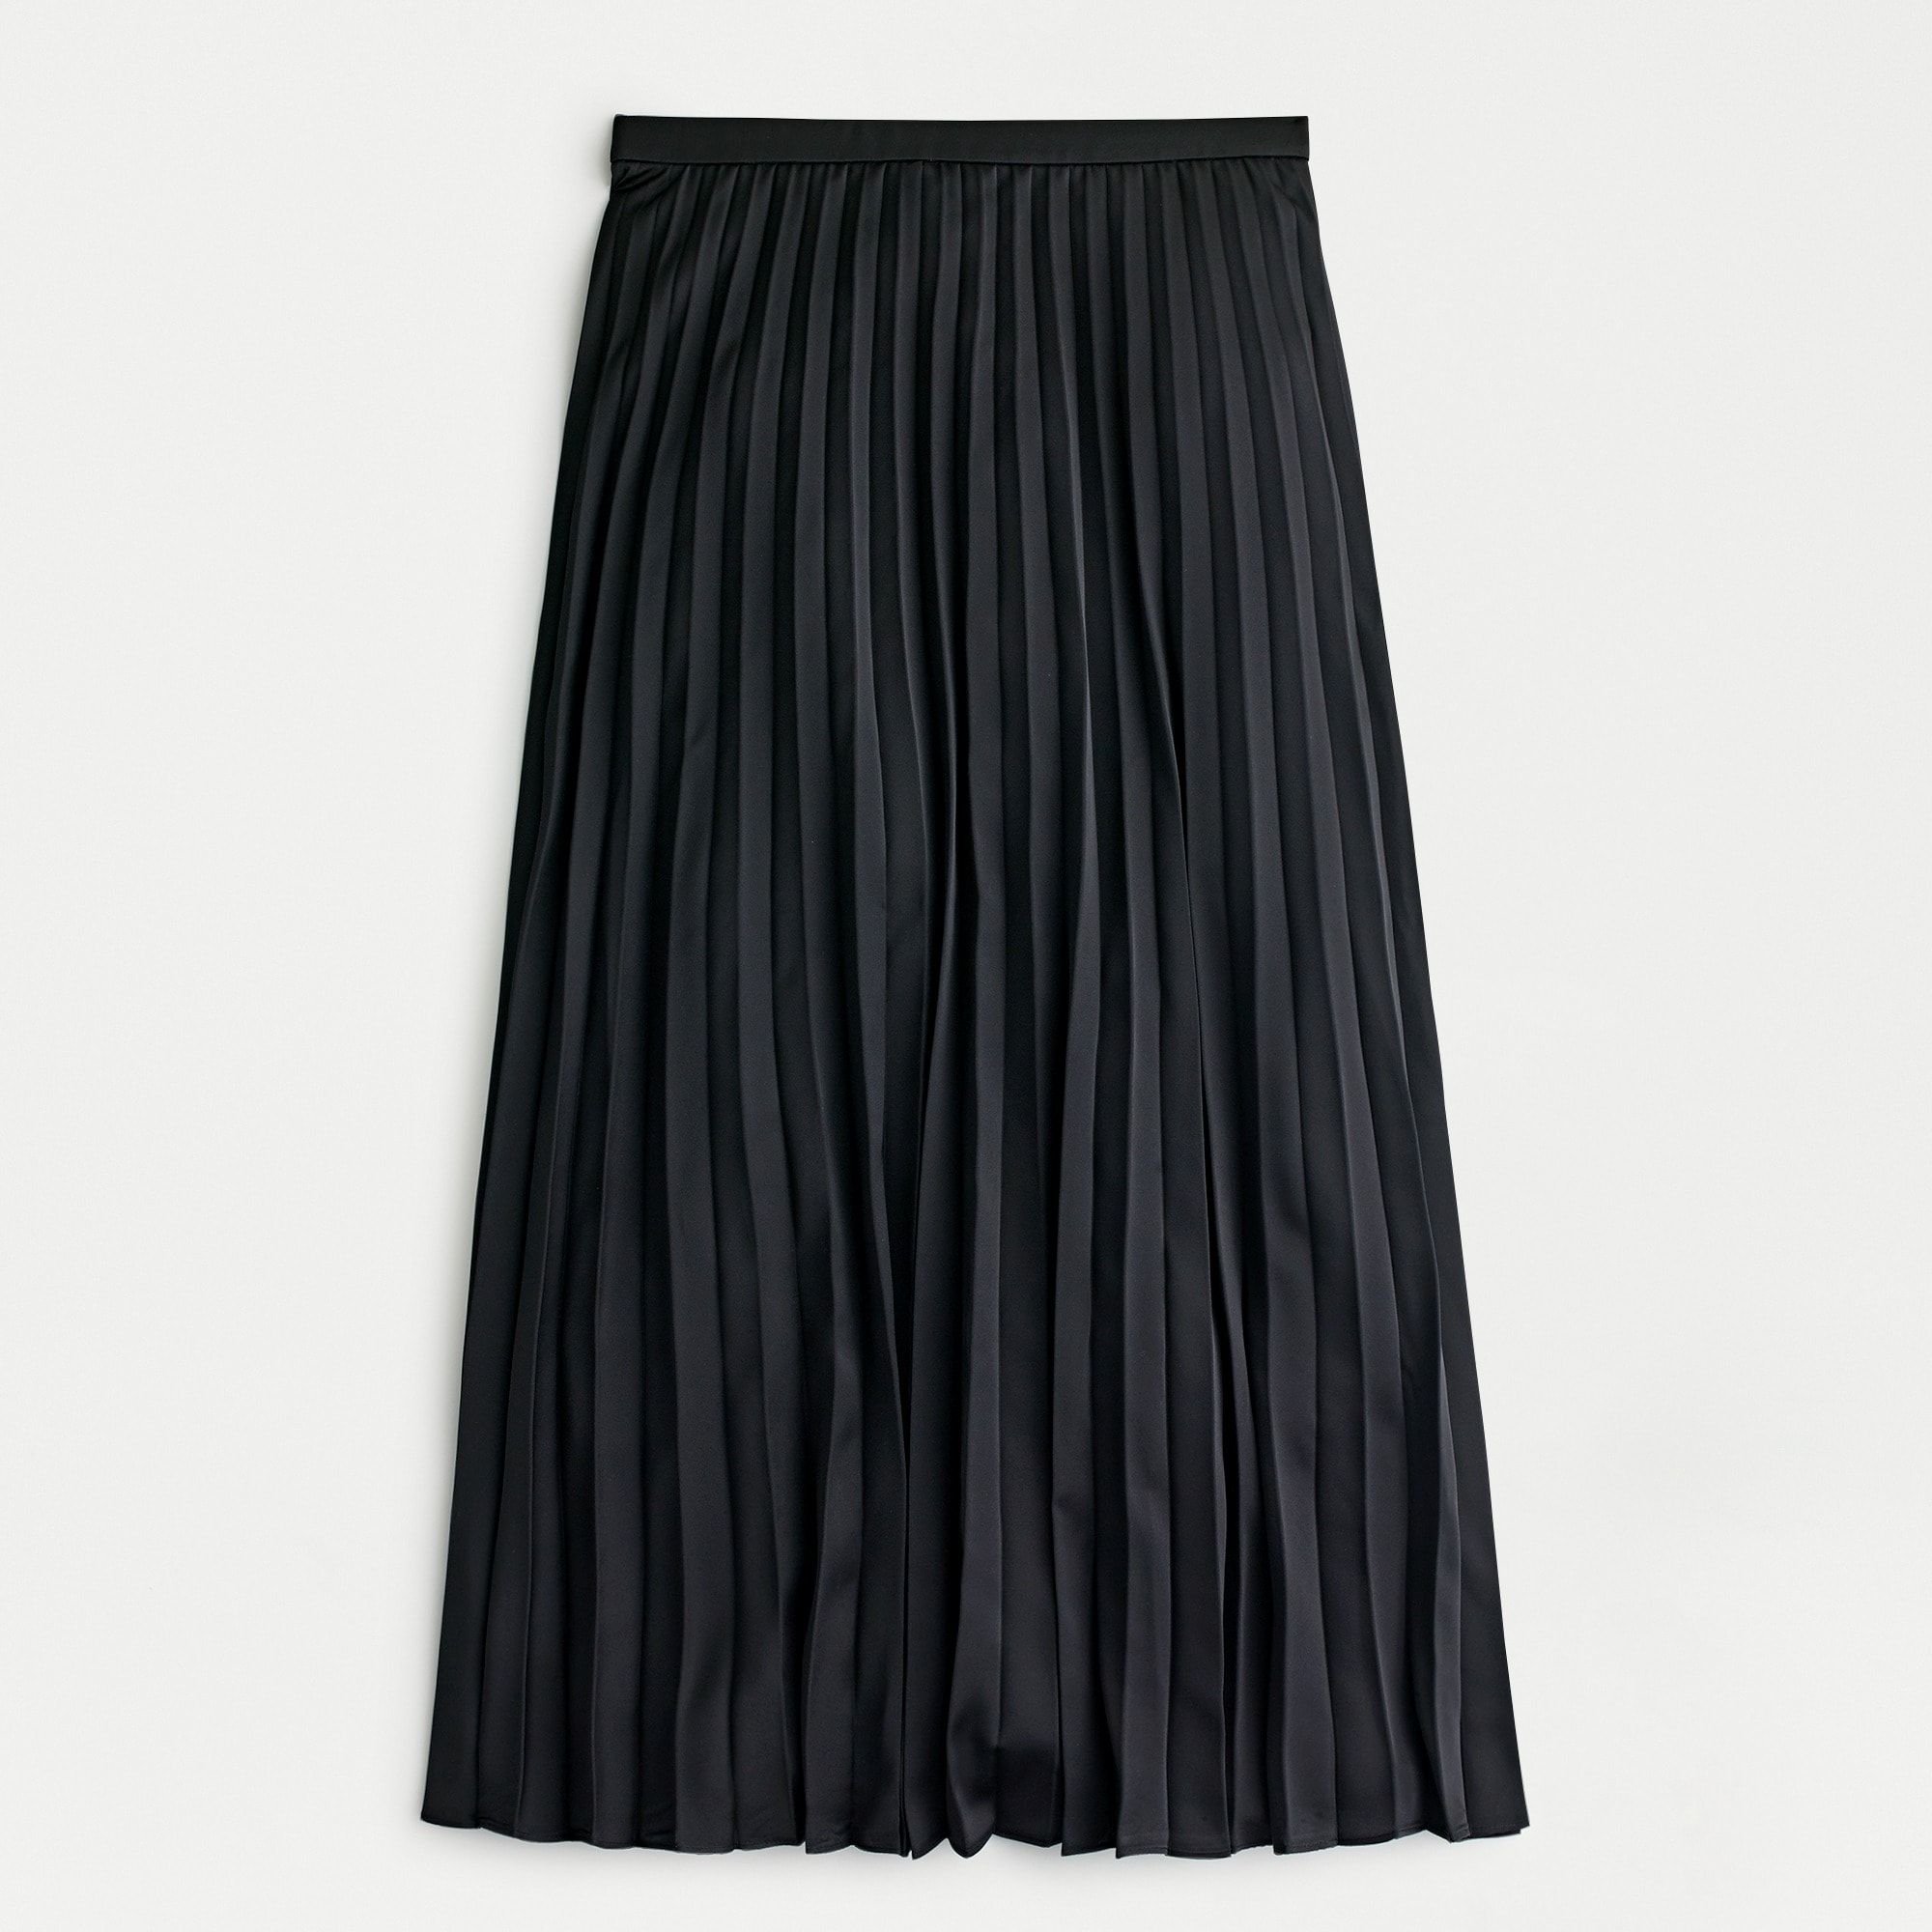 Womens Skirts : Womens New Arrivals | J.Crew